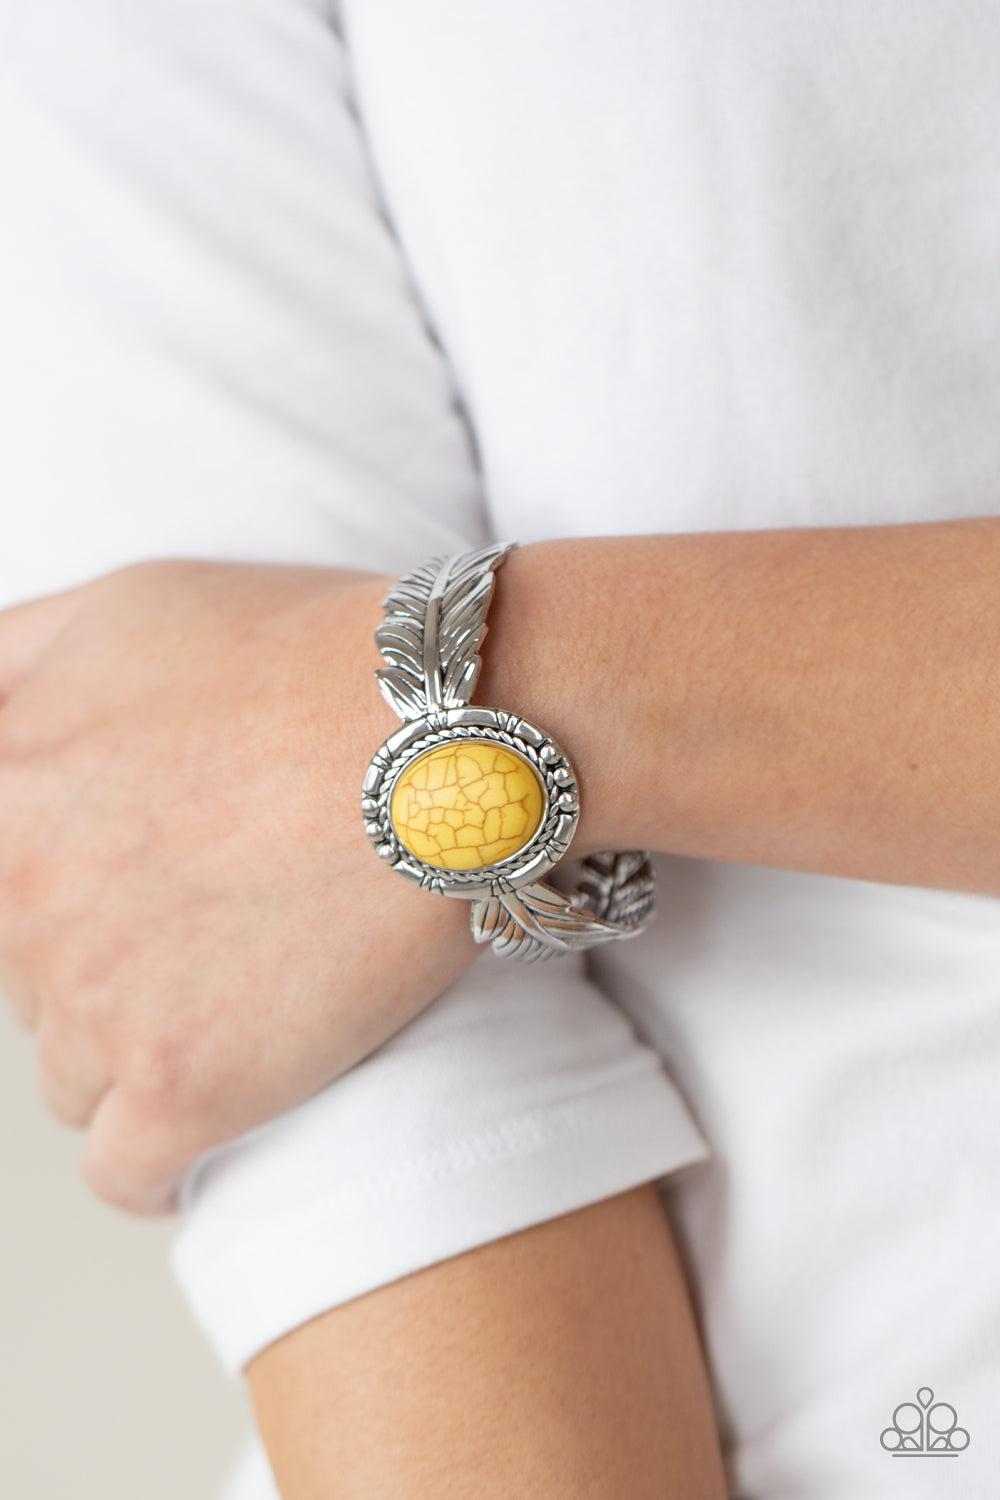 Western Wings Yellow Stone Cuff Bracelet - Paparazzi Accessories- lightbox - CarasShop.com - $5 Jewelry by Cara Jewels